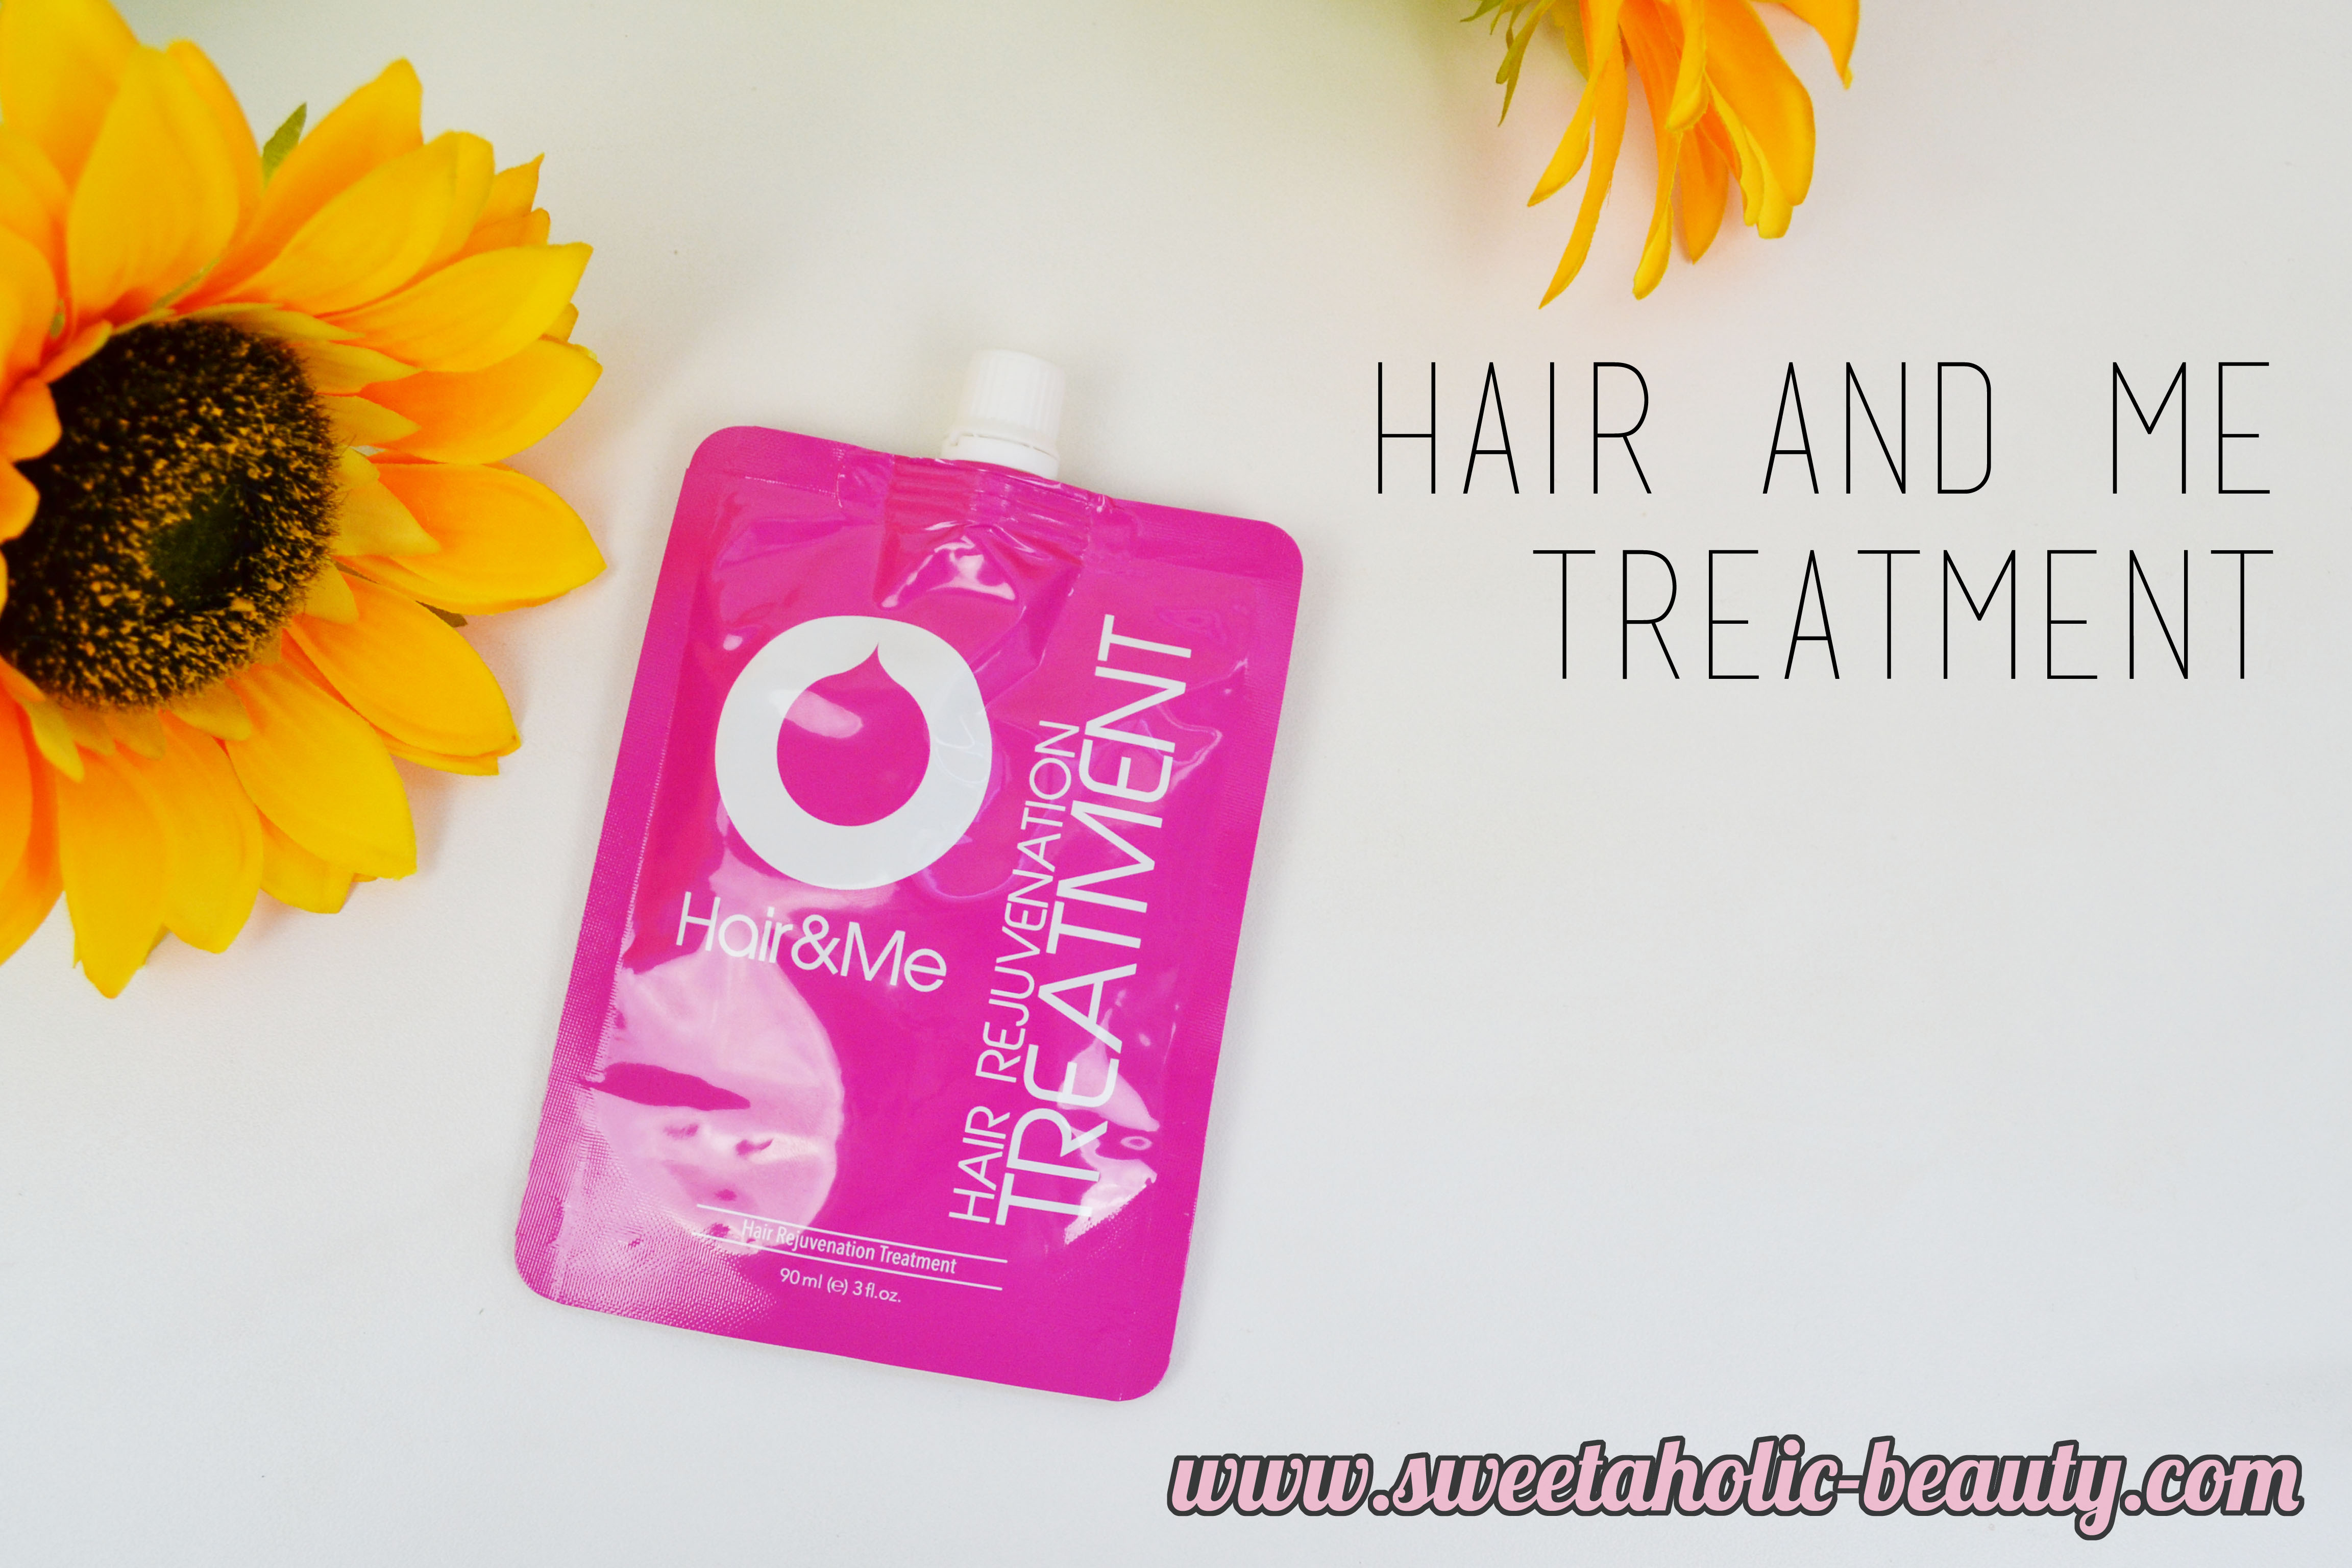 Hair & Me Hair Rejuvenation Treatment Review - Sweetaholic Beauty